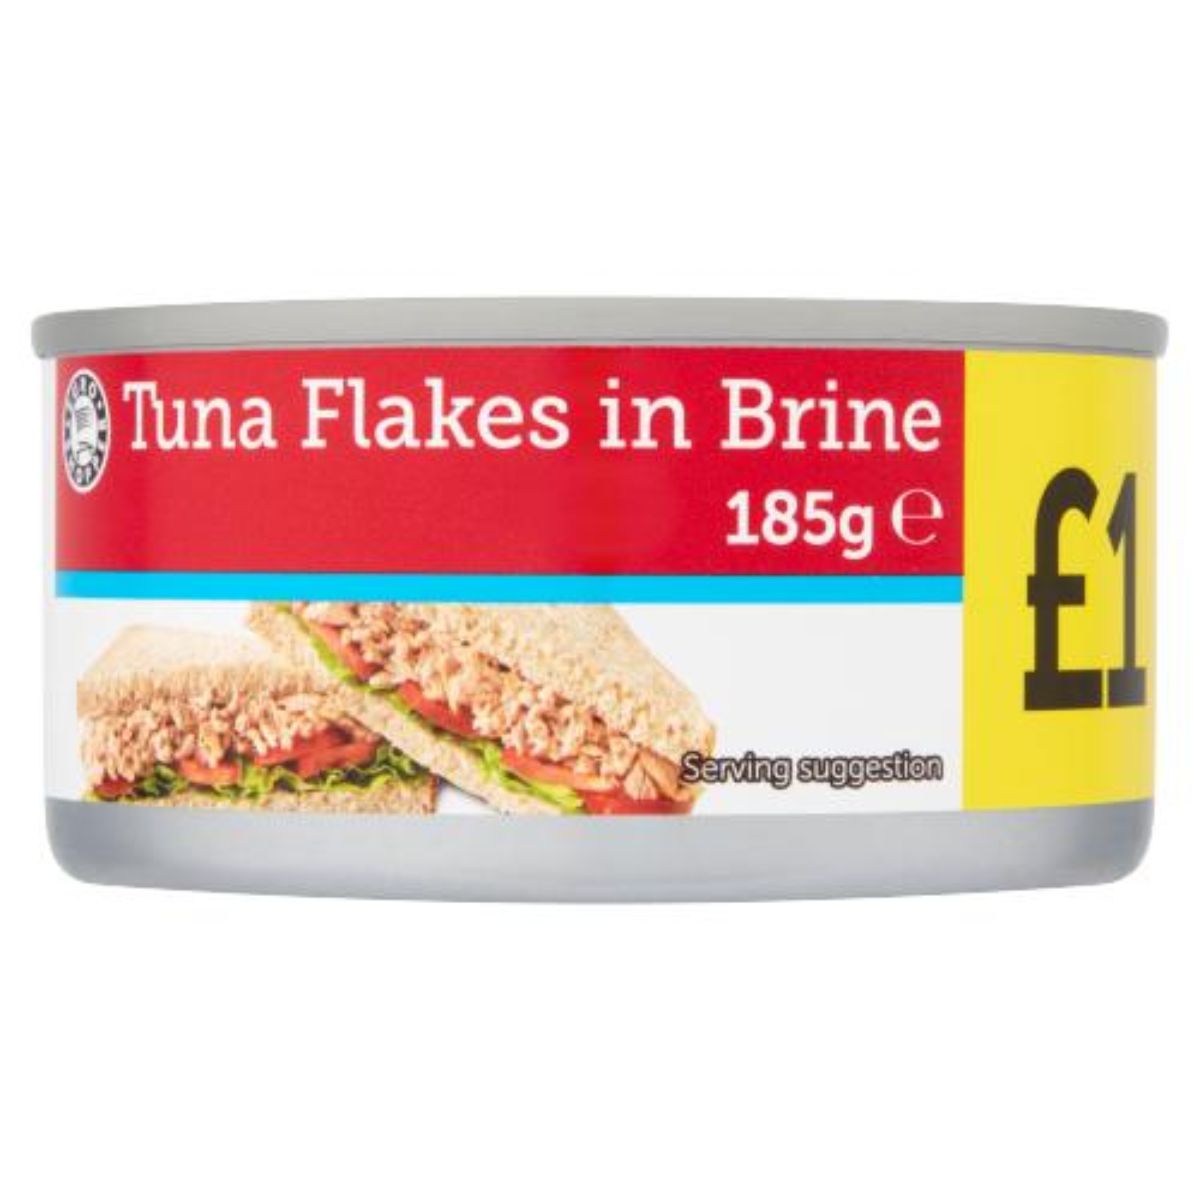 A can of Euro Shopper - Tuna Flakes in Brine - 185g.